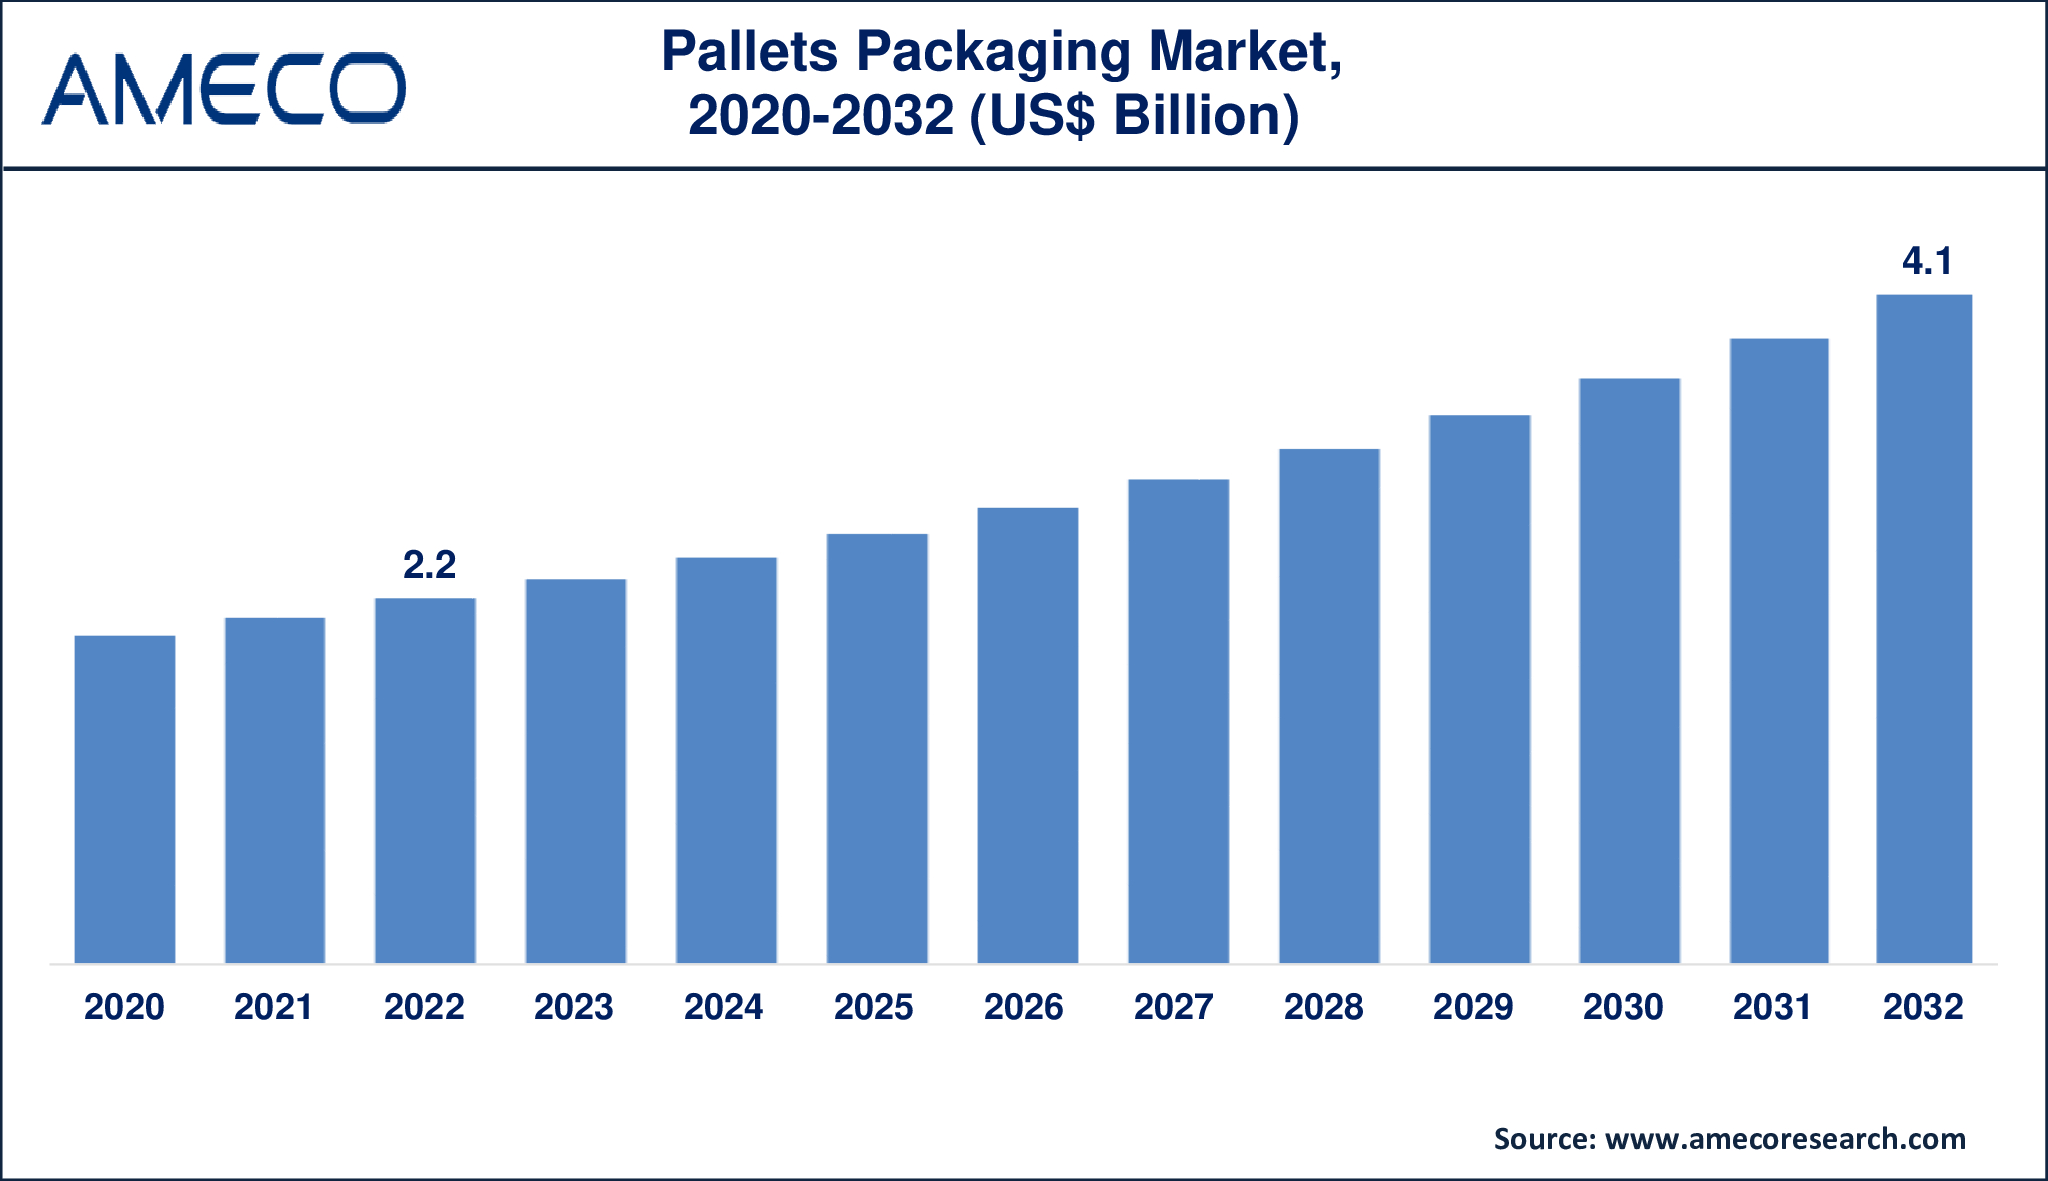 Pallets Packaging Market Dynamics